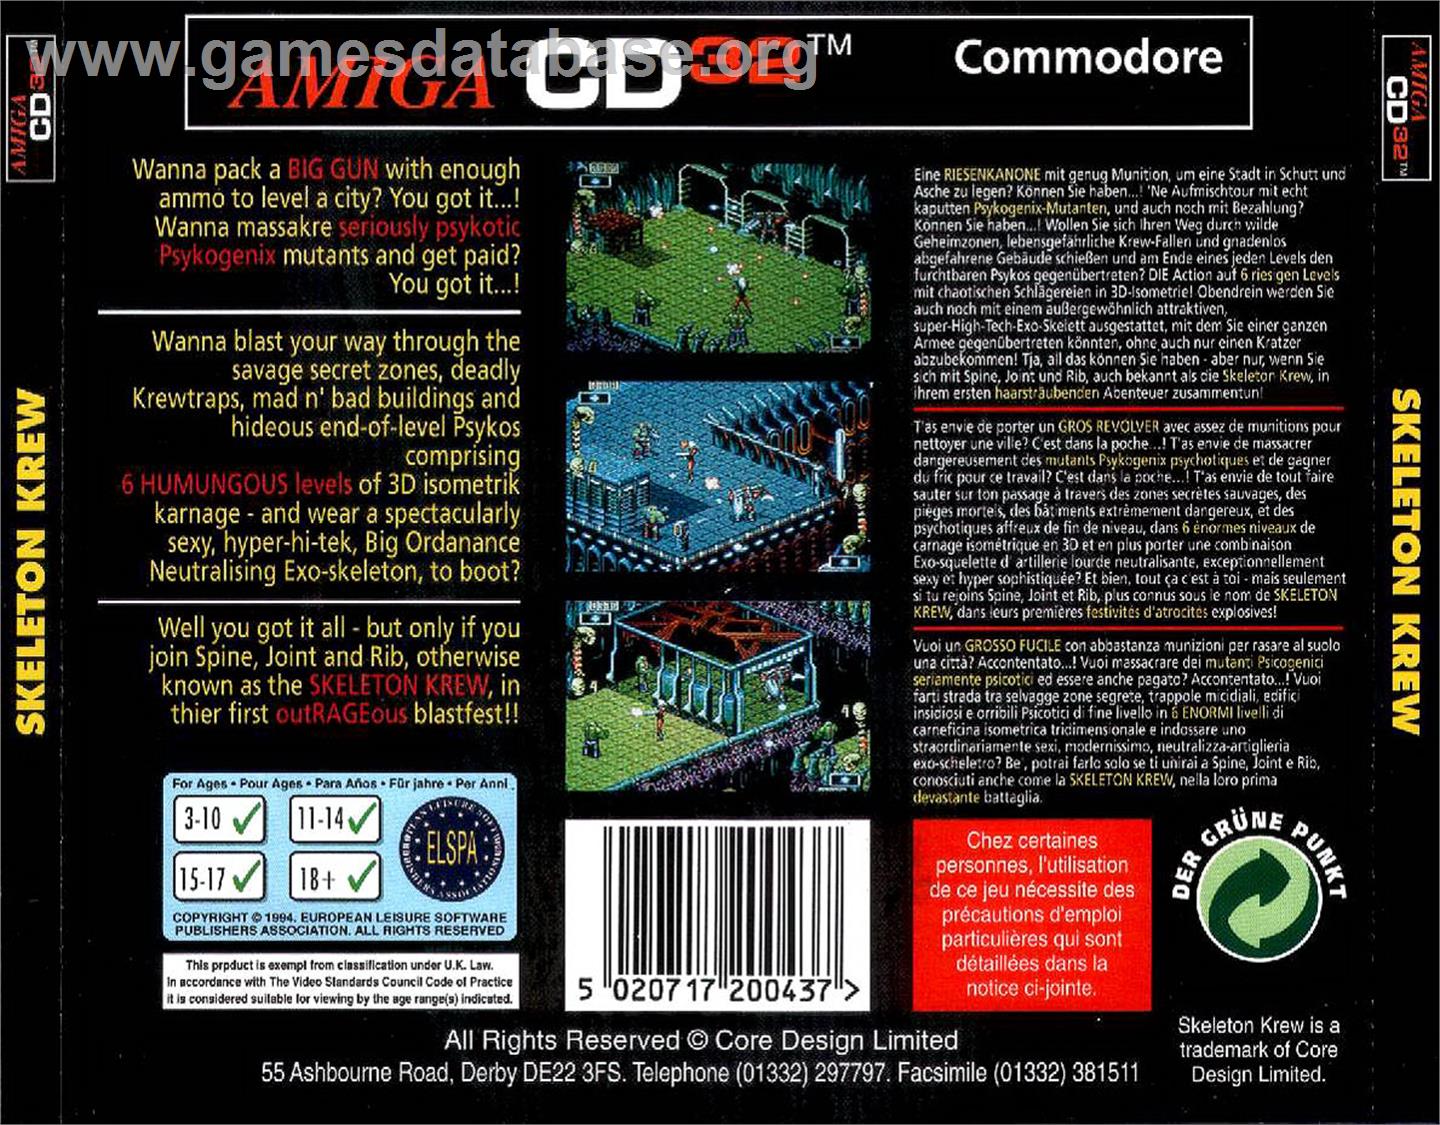 Skeleton Krew - Commodore Amiga CD32 - Artwork - Box Back